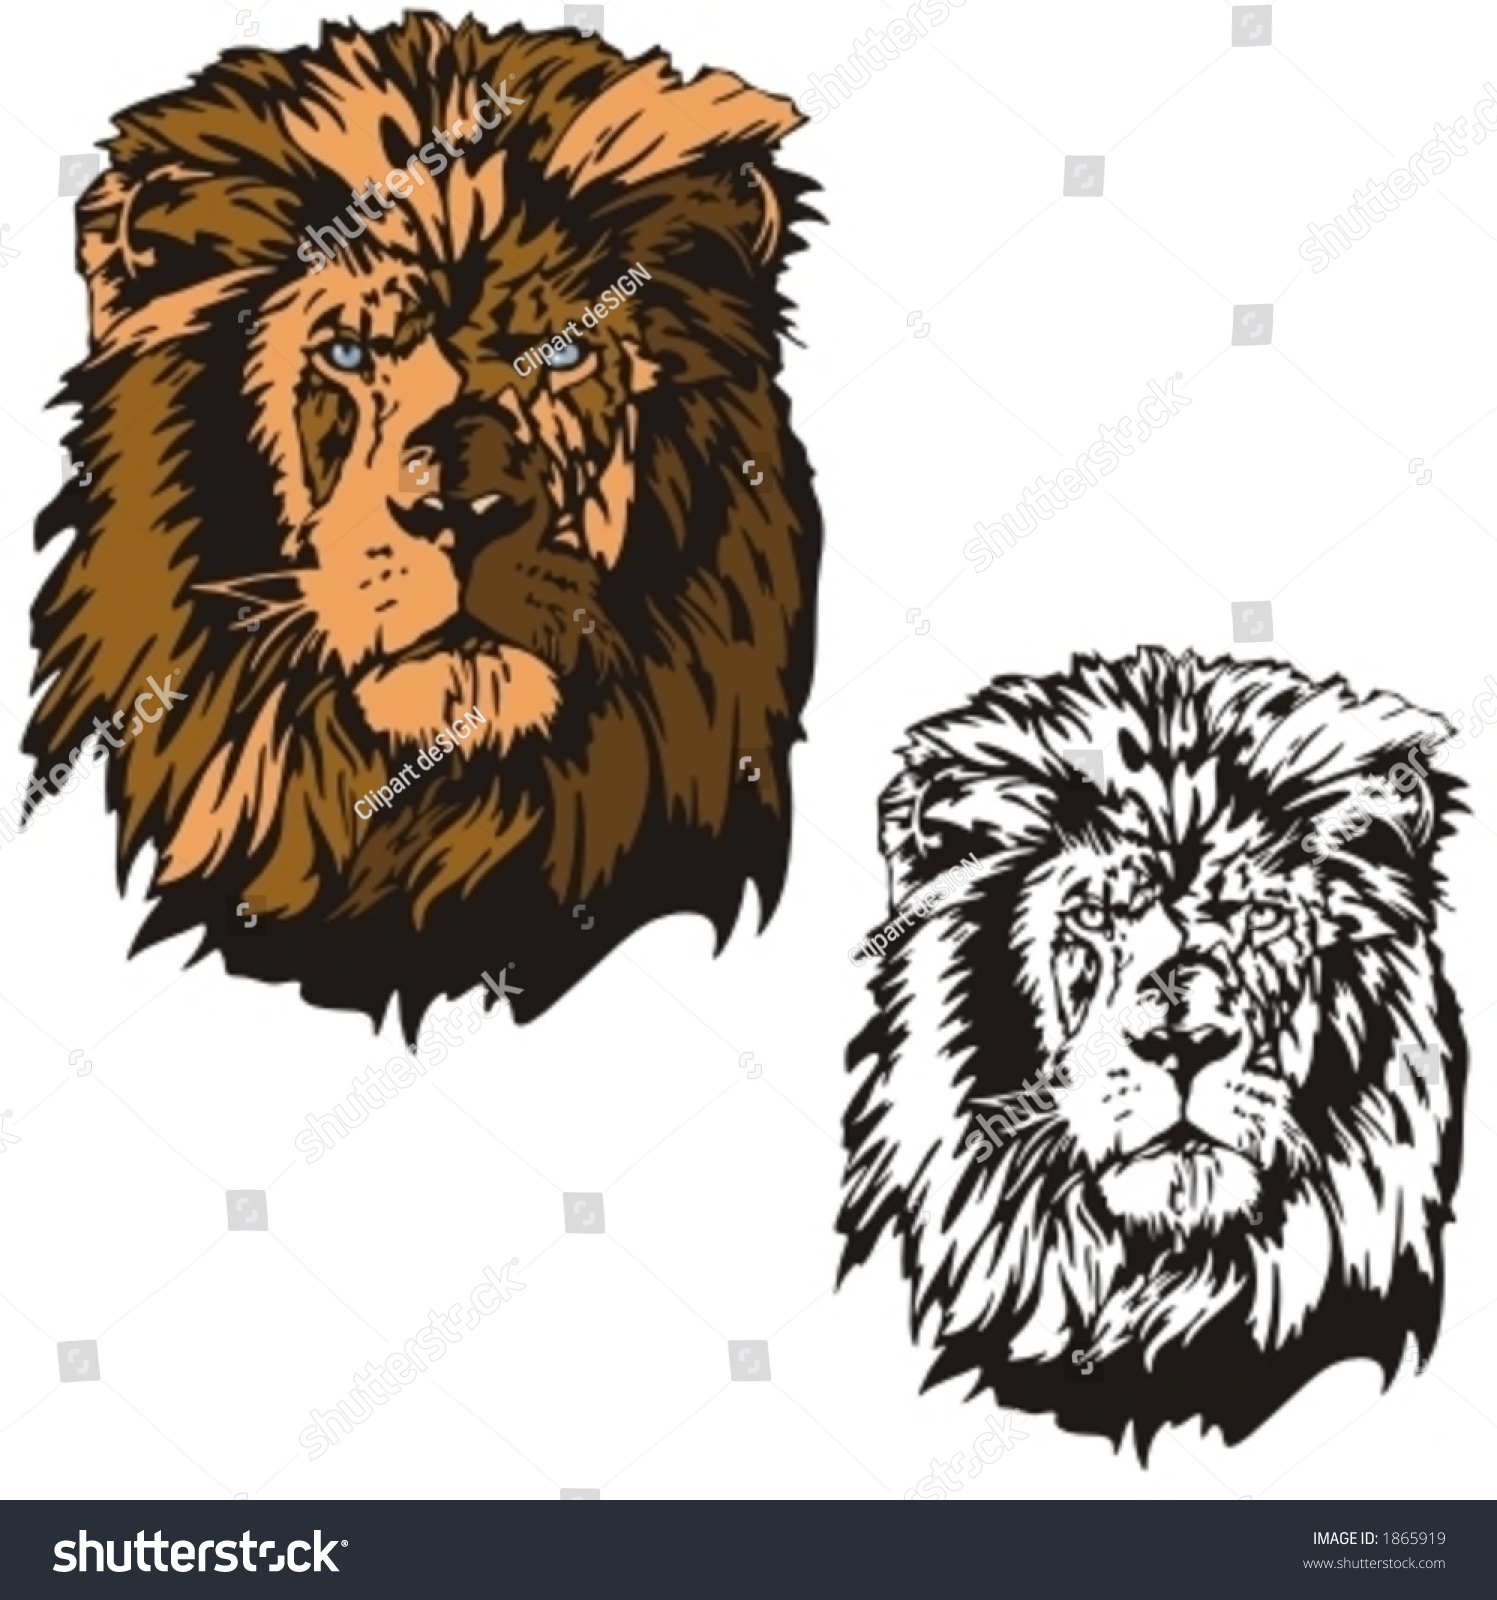 Vector Illustration Of A Lion. - 1865919 : Shutterstock